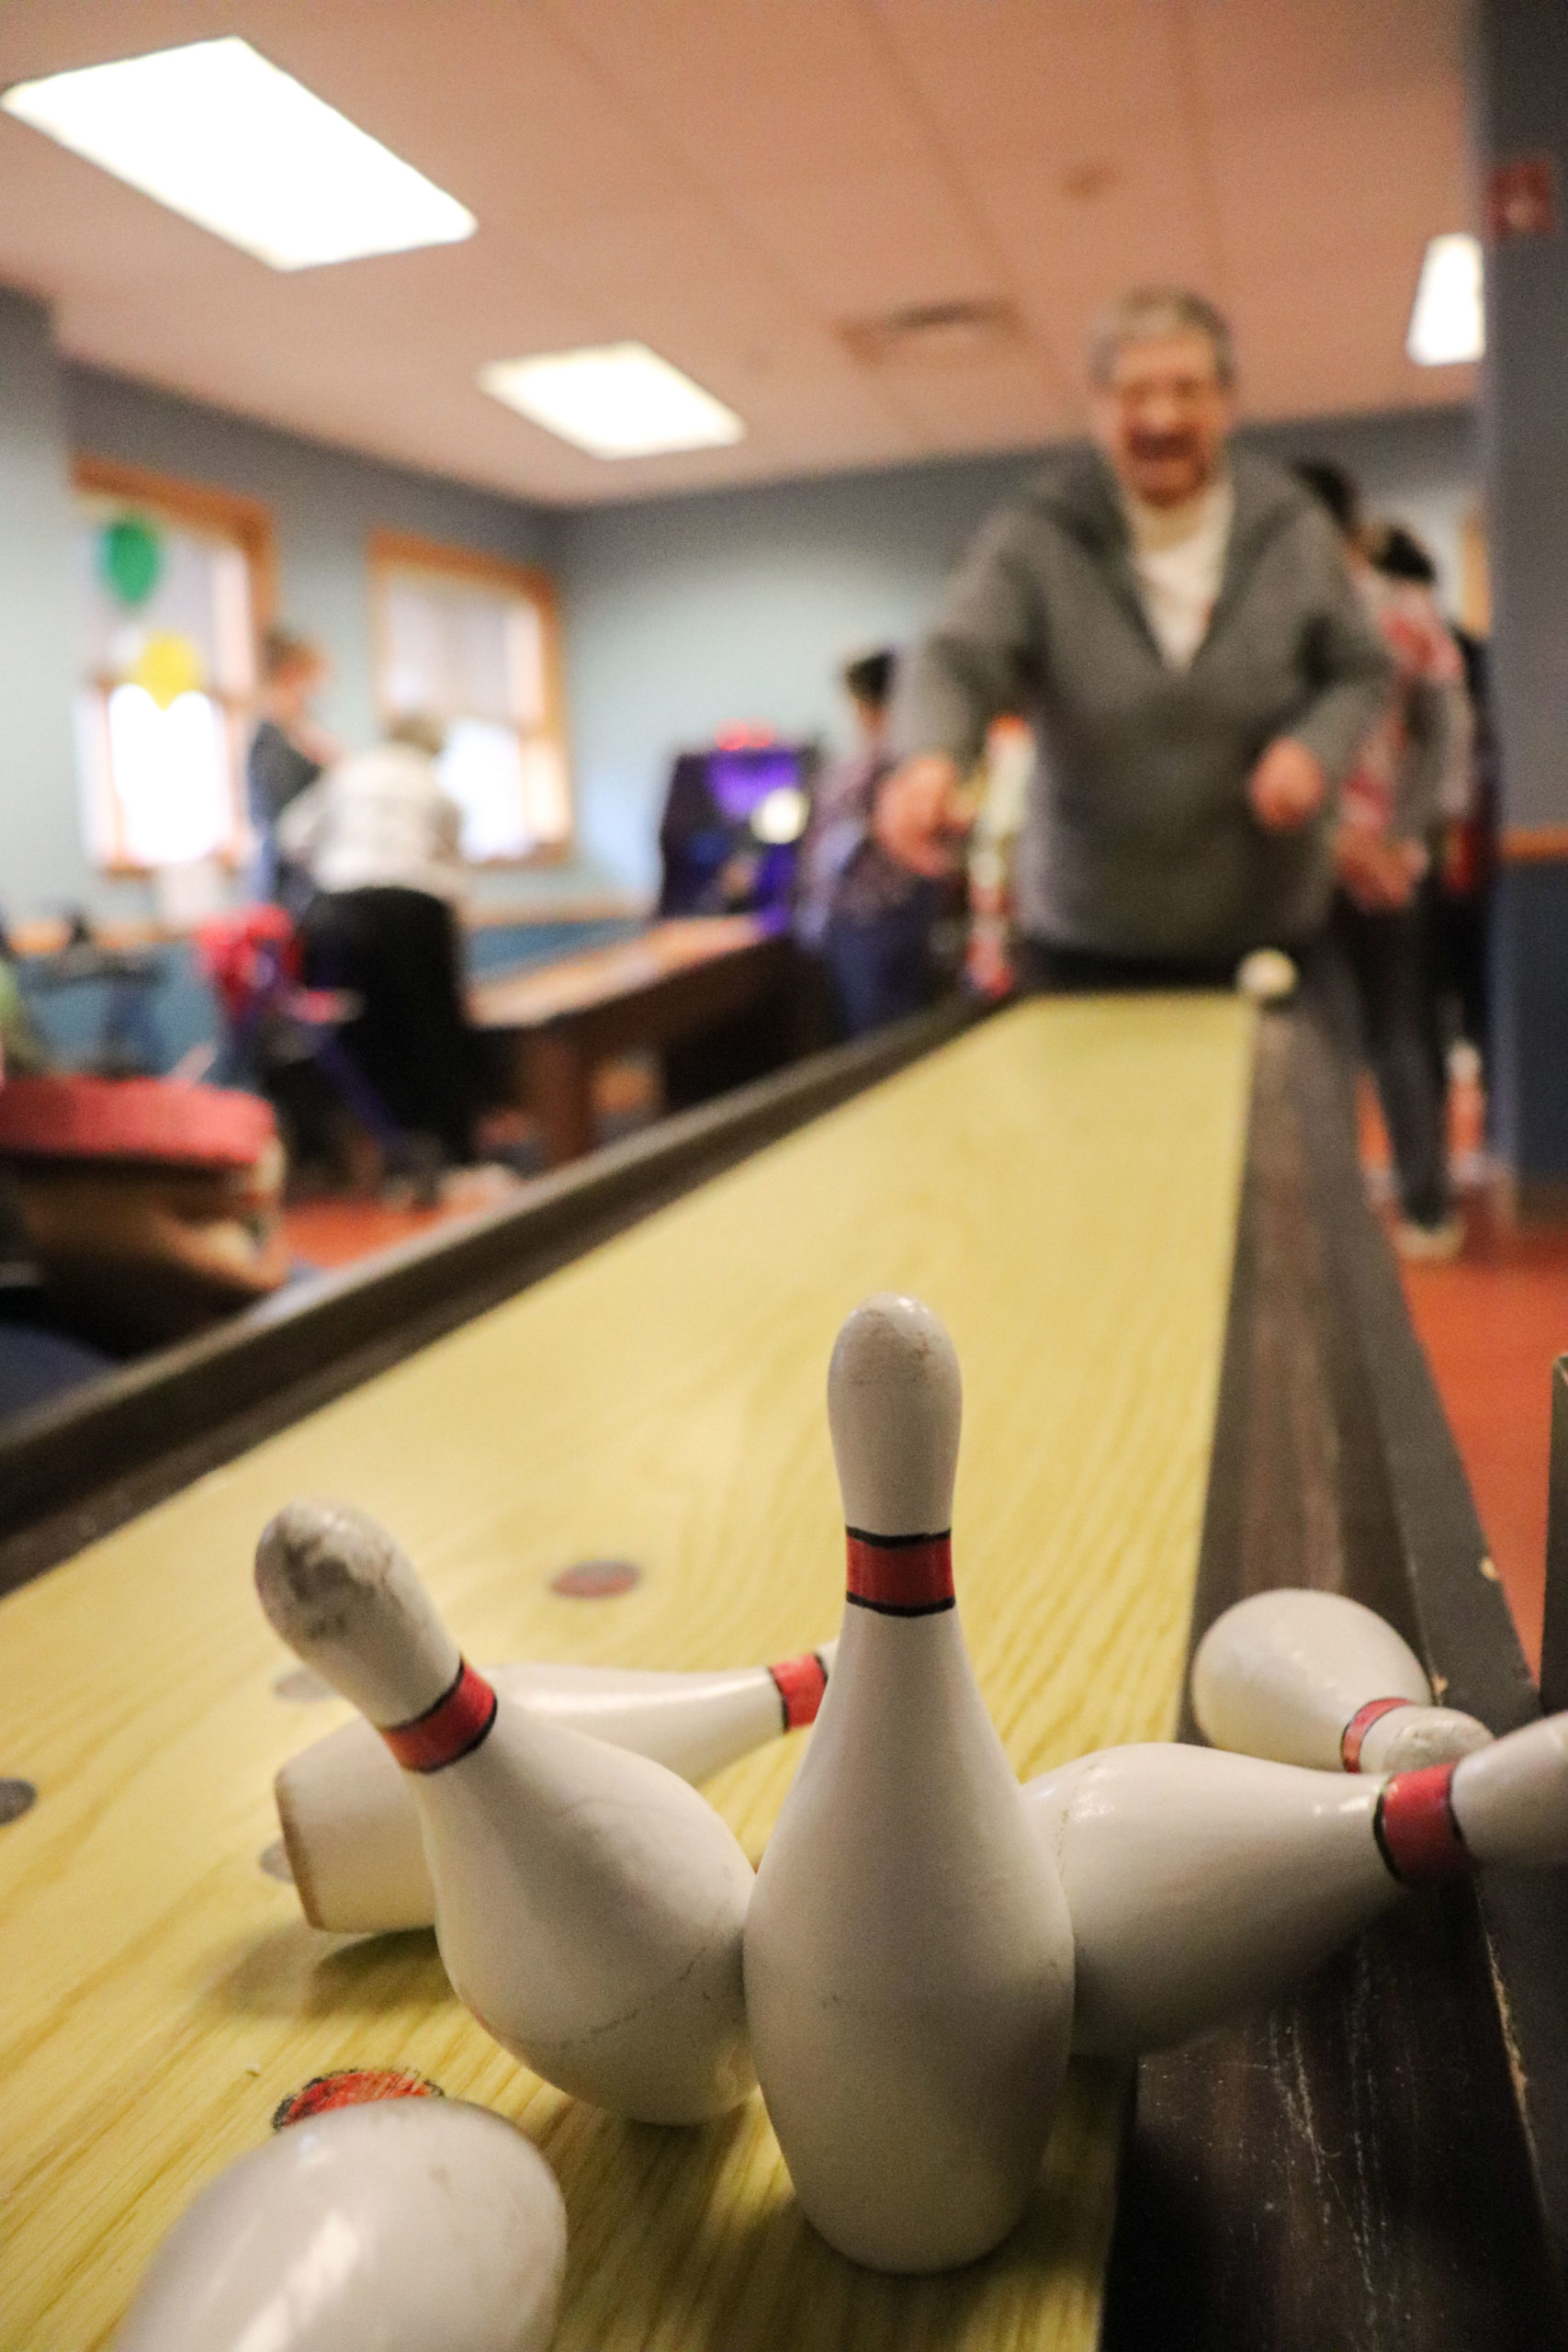 Falling bowling pins and man table bowling, Masonic Care Community Bowling center